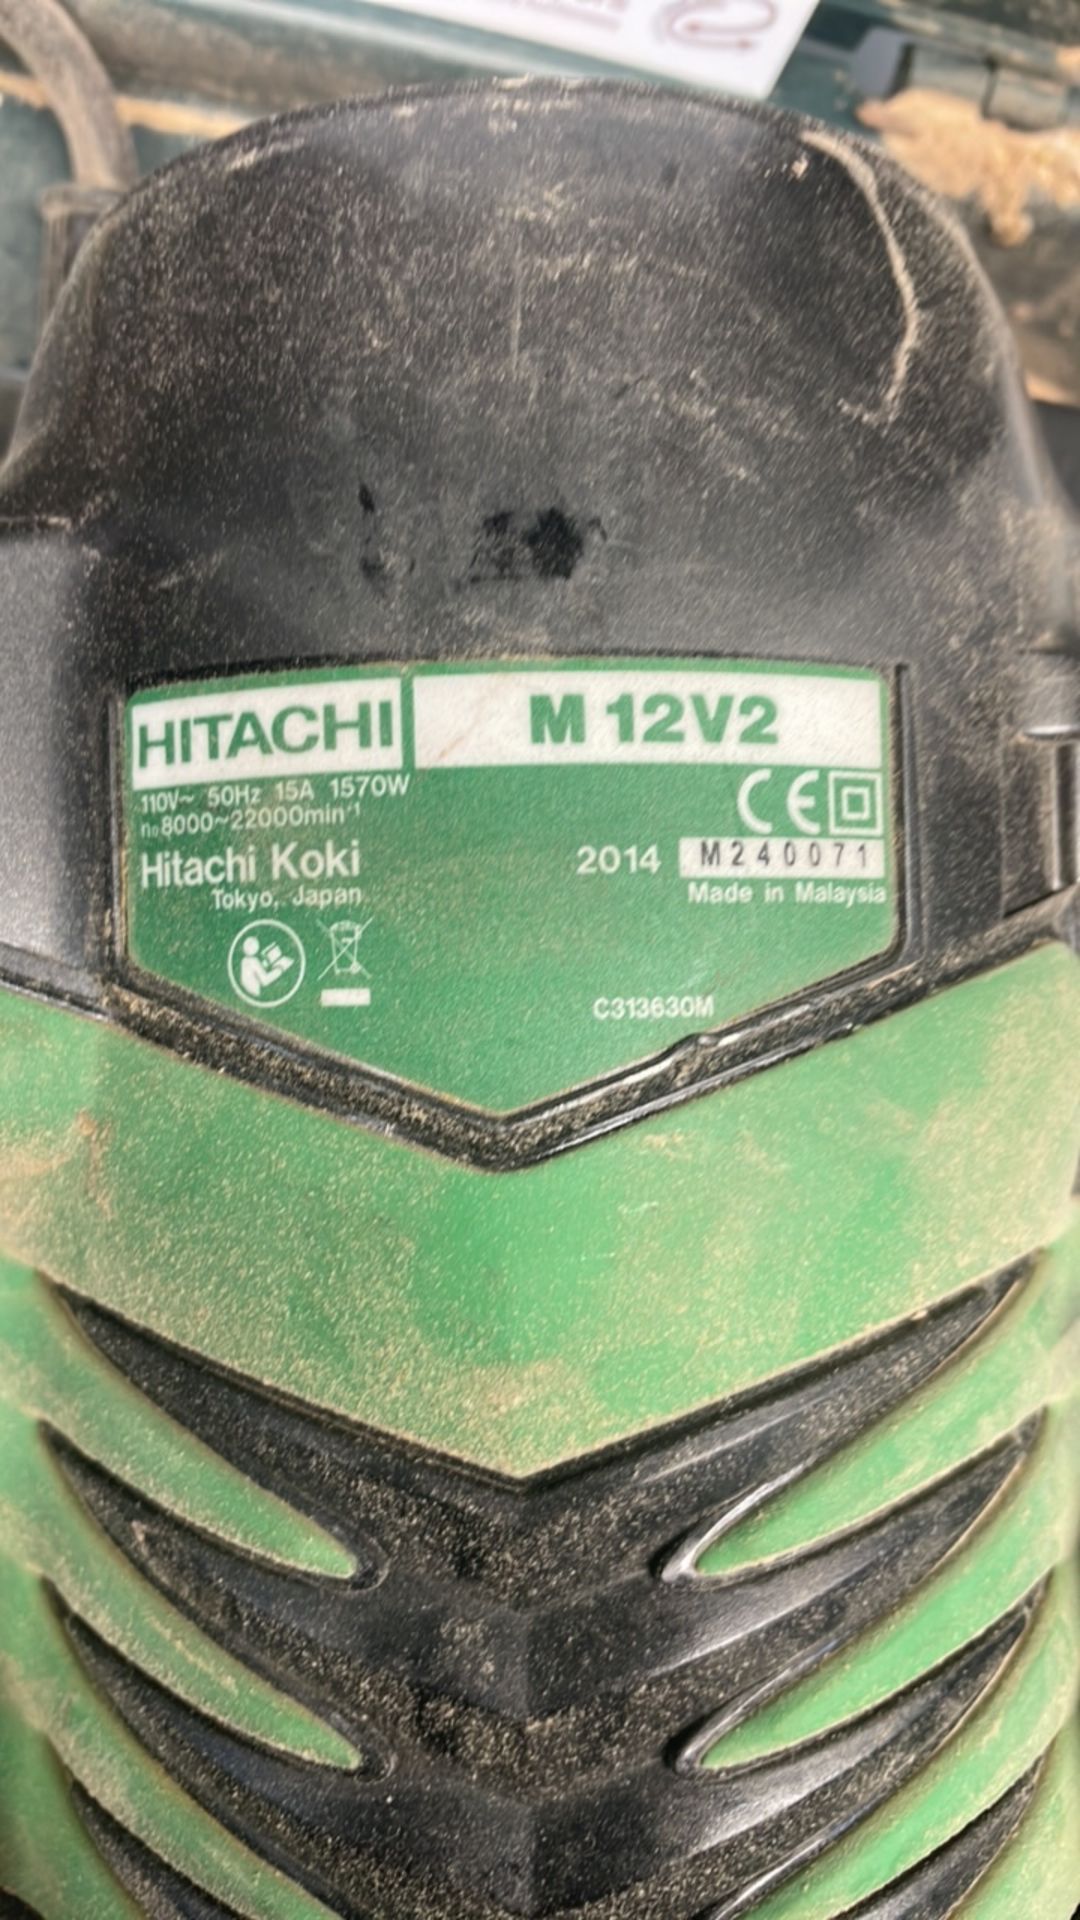 Hitachi M12V2 Router in Case - Image 4 of 4